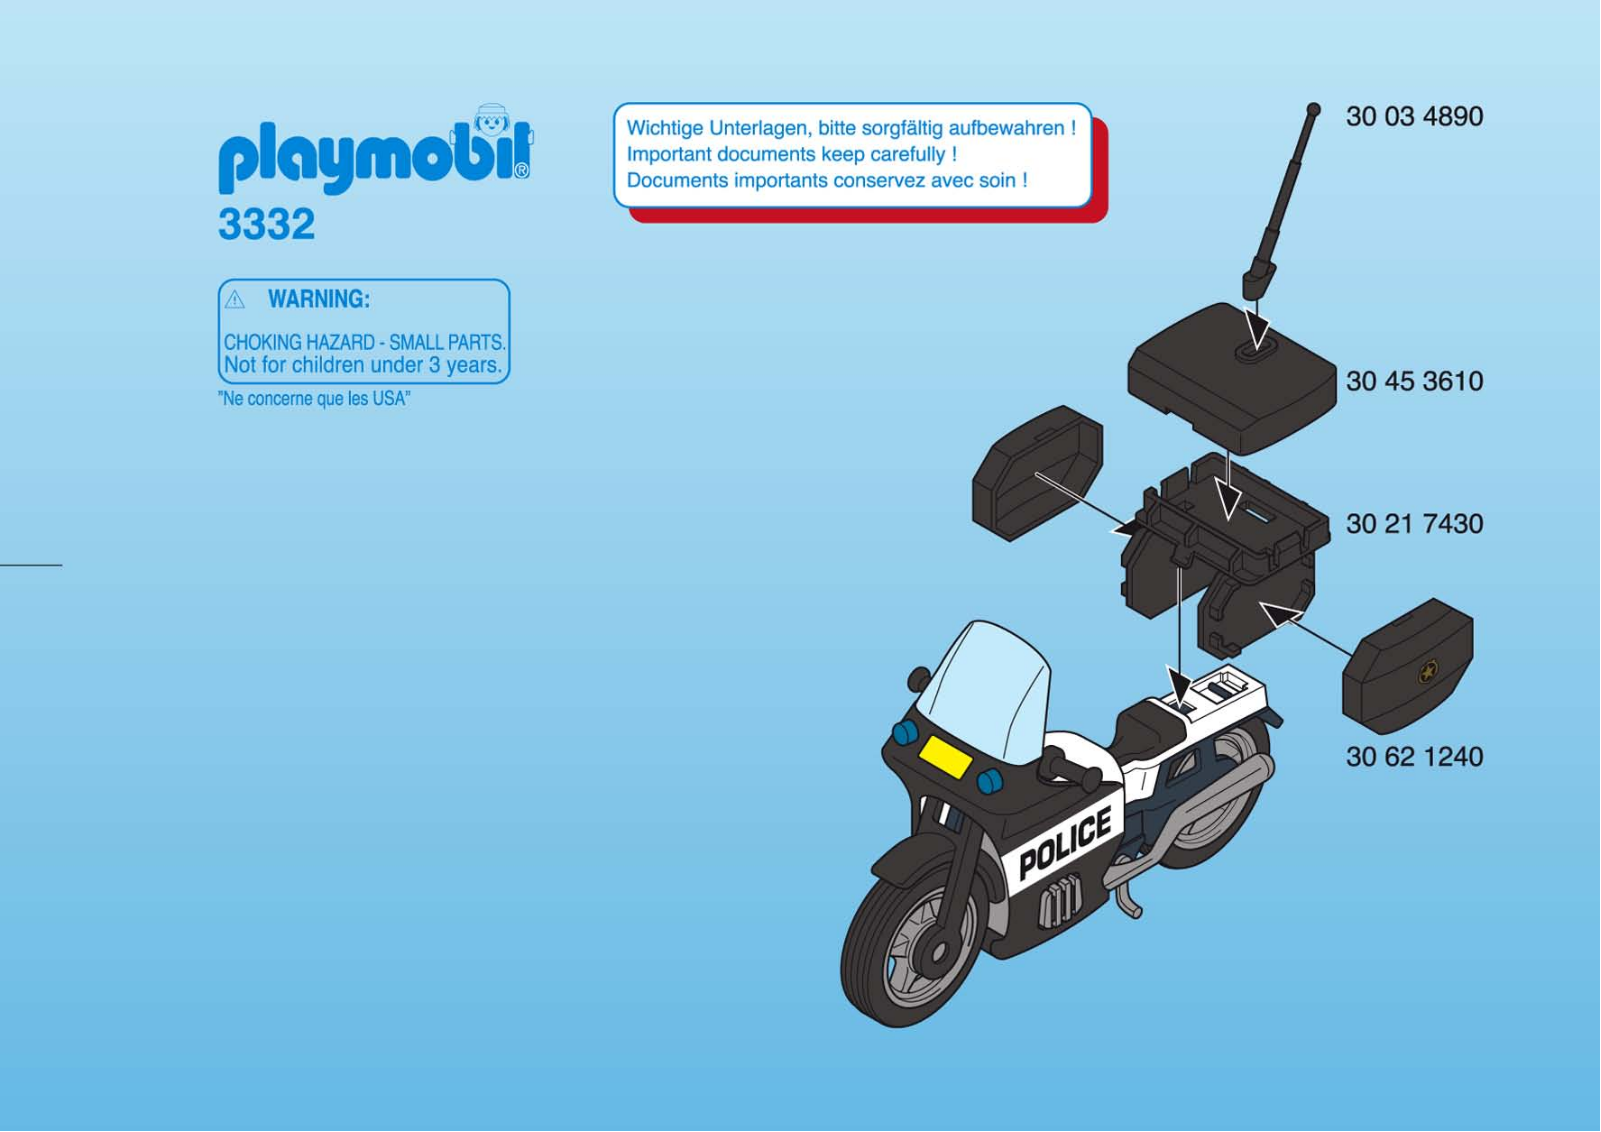 Playmobil 3332 Instructions